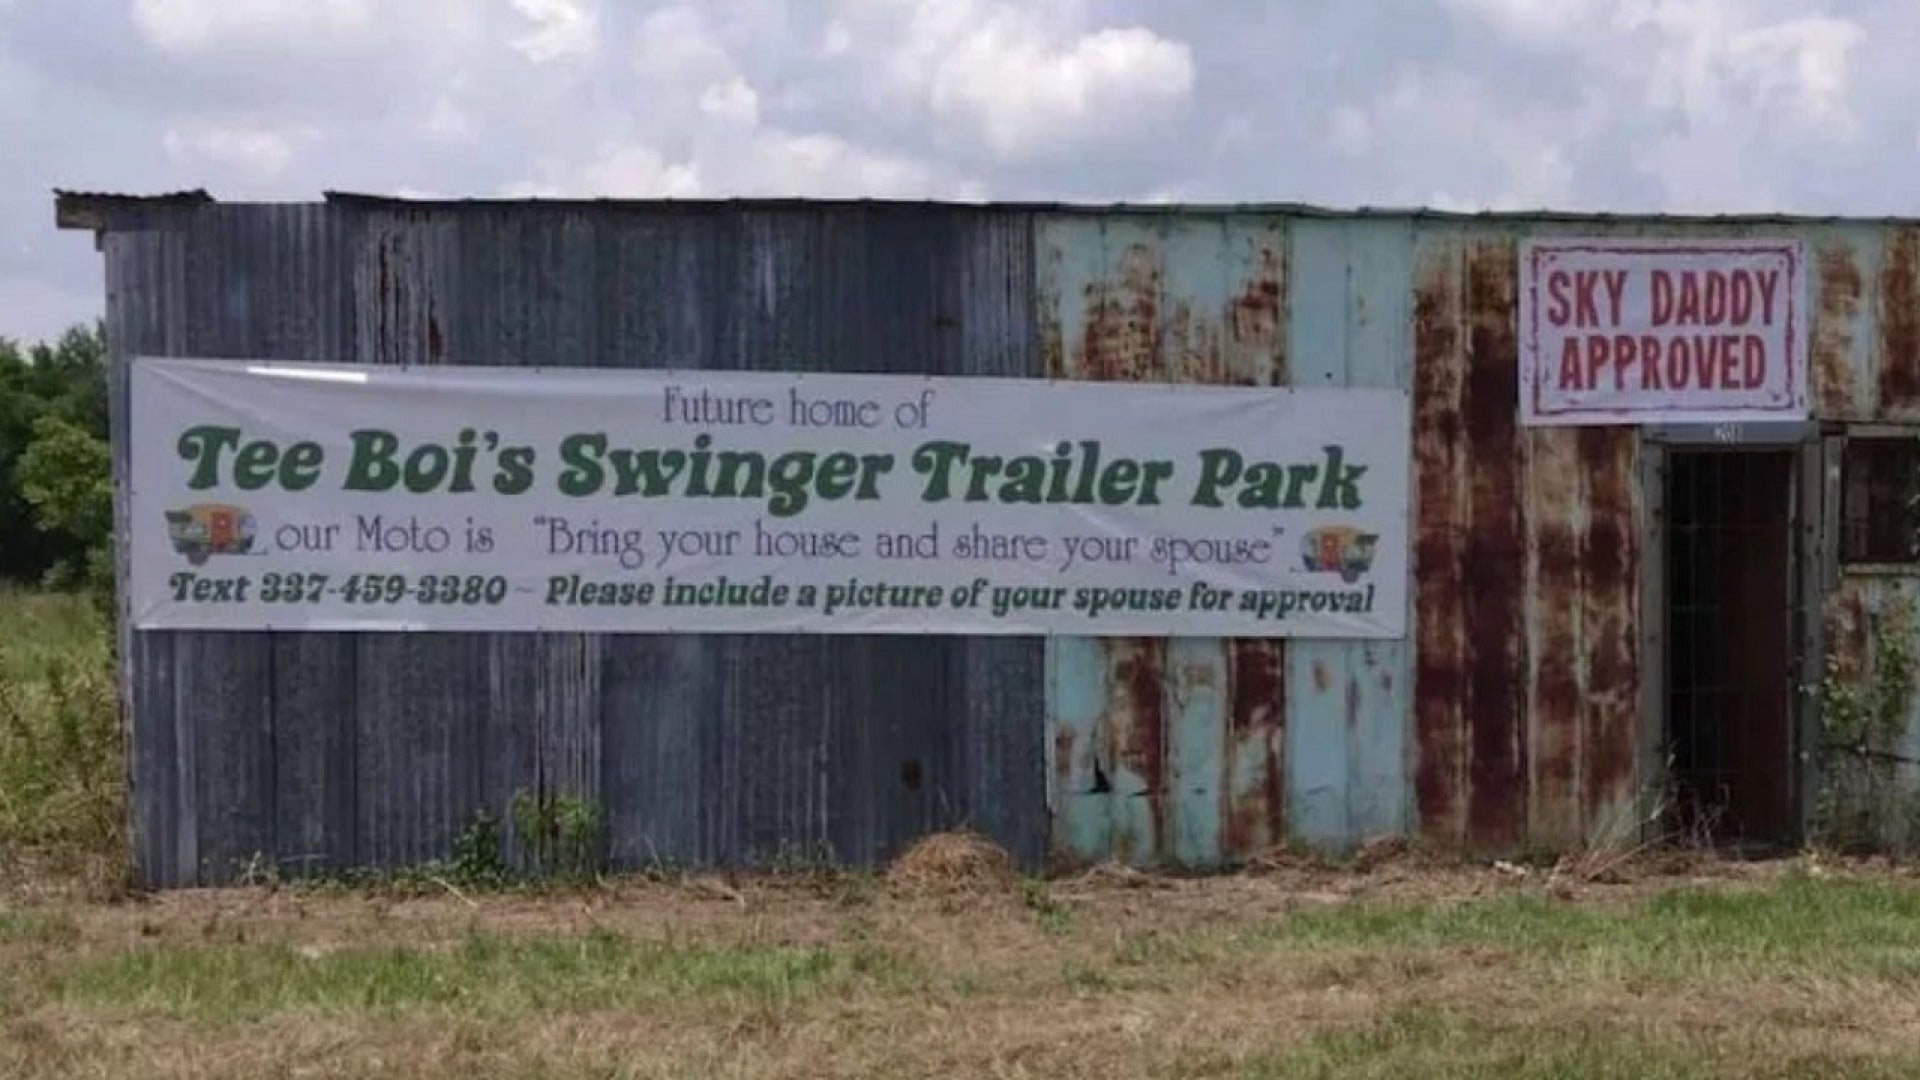 Opening Trailer Park for Swingers photo